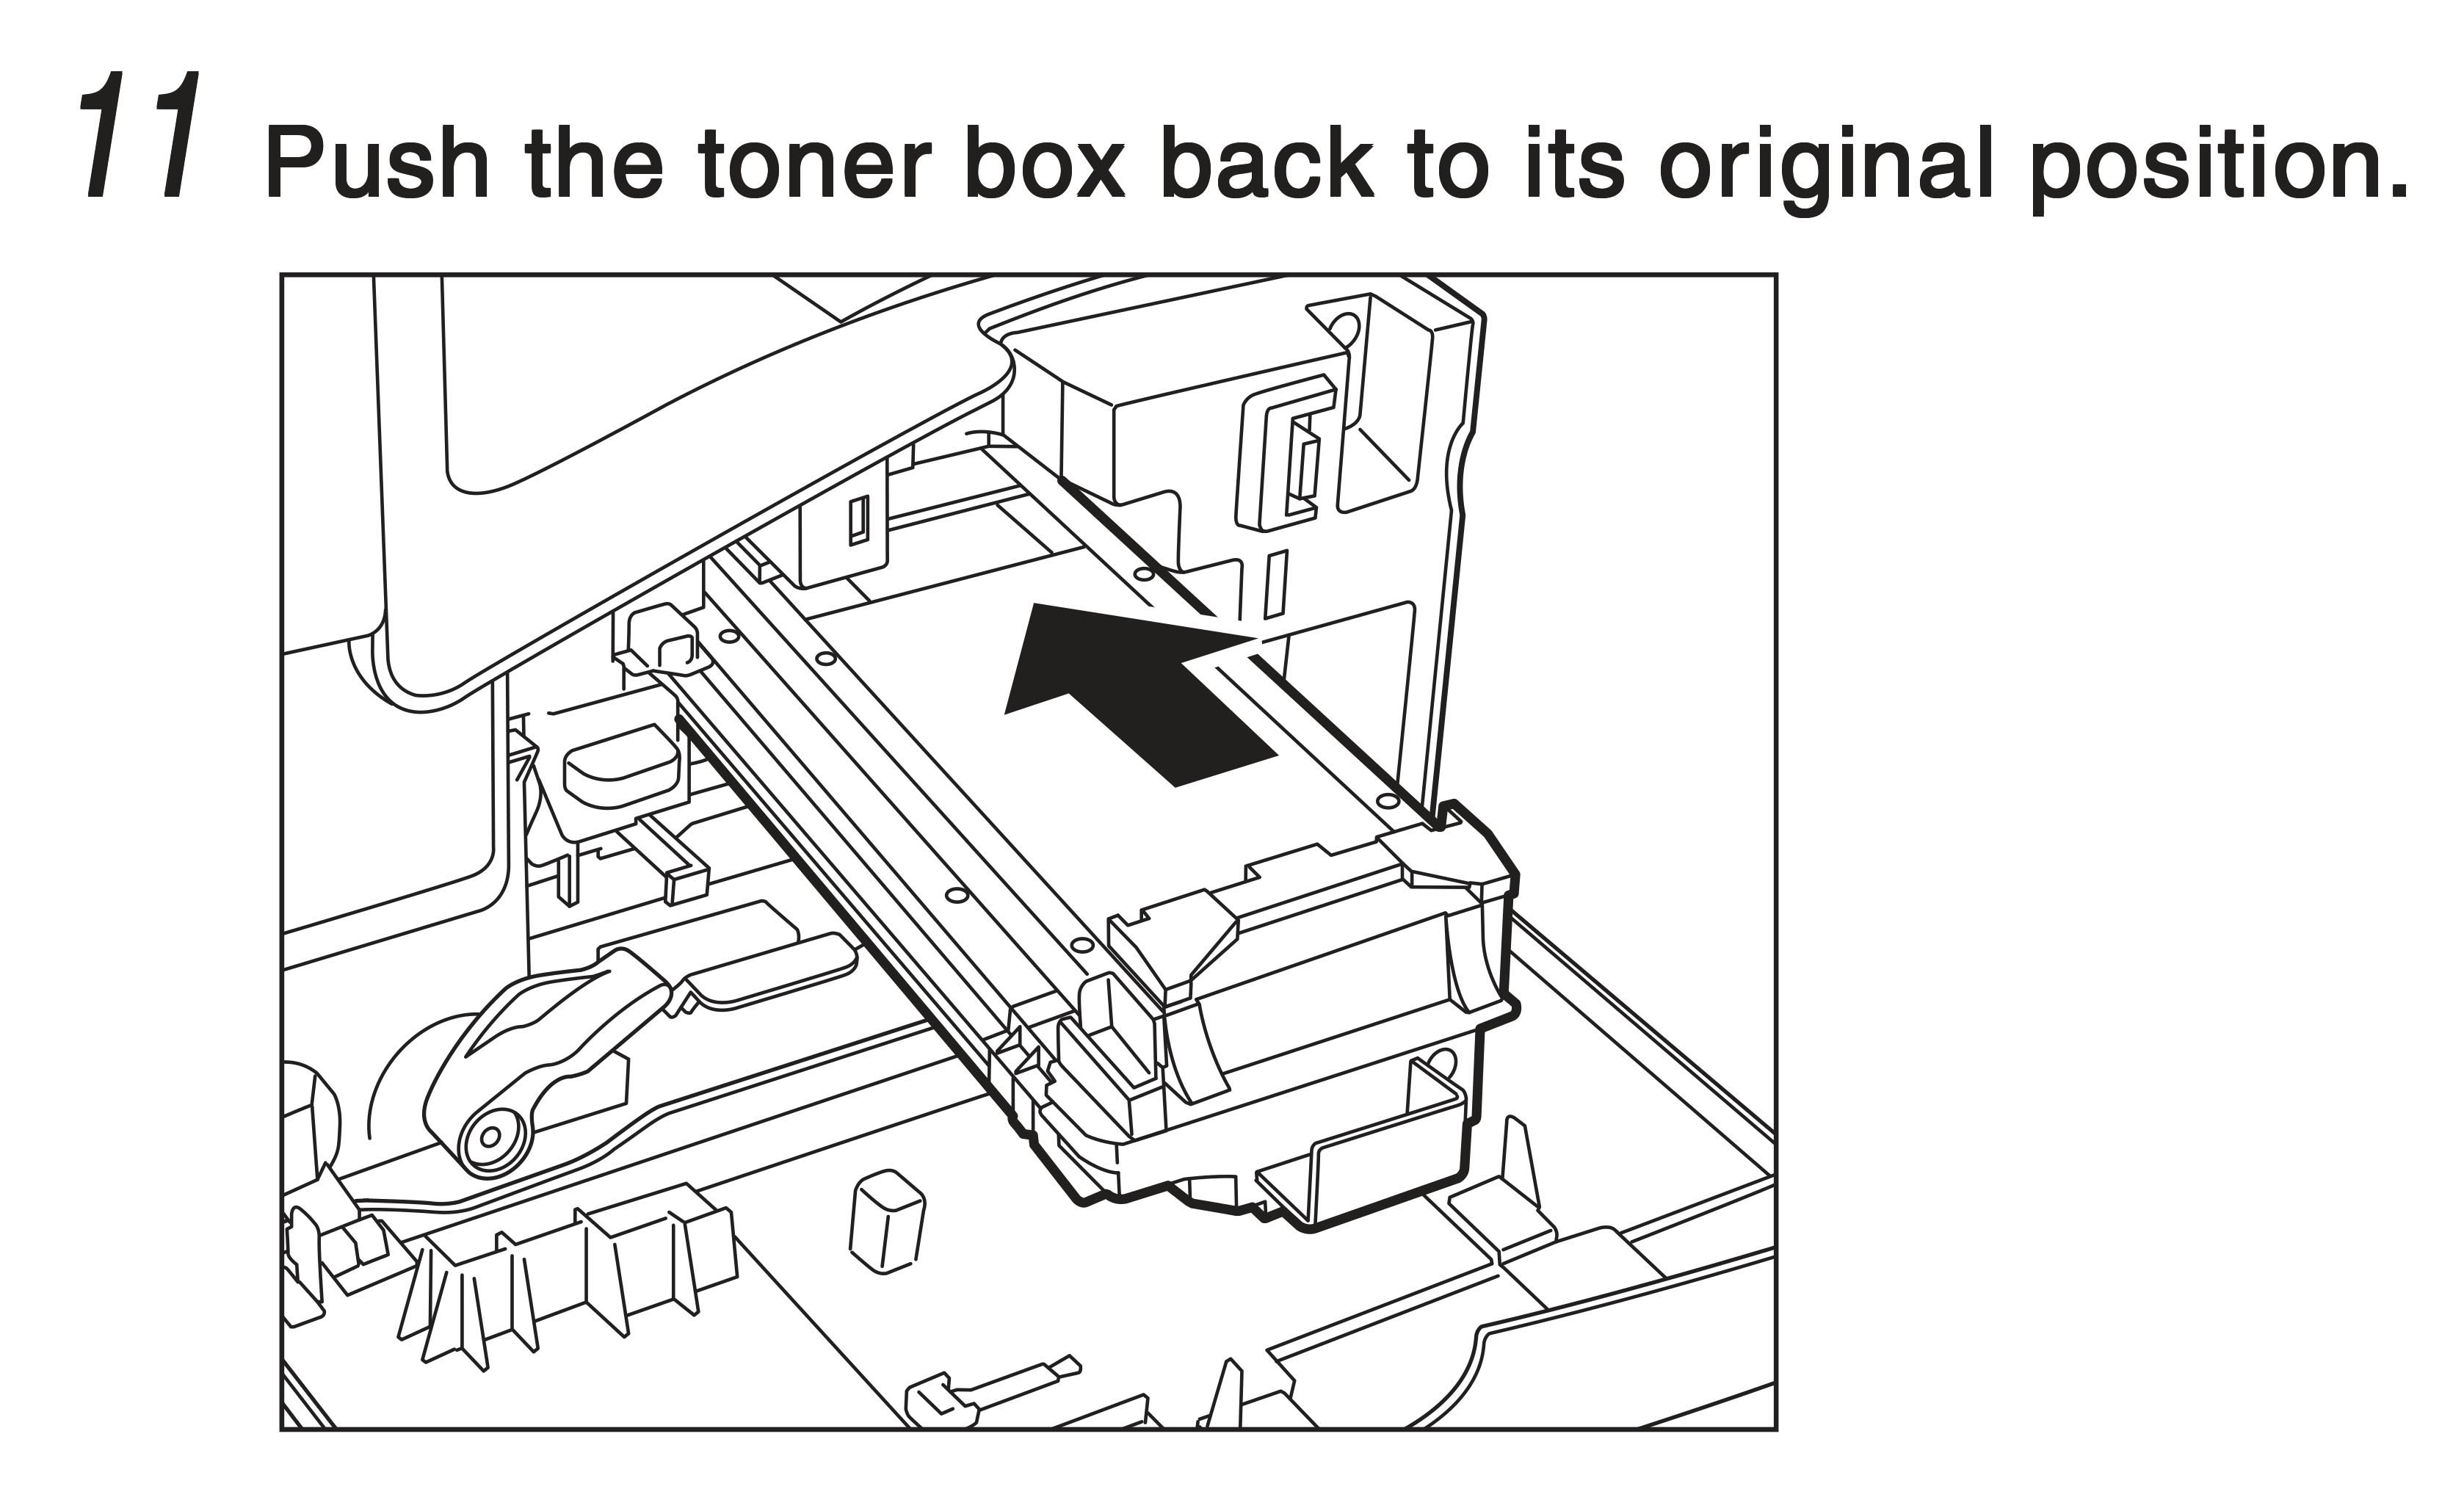 11. Push the toner box back to its original position.